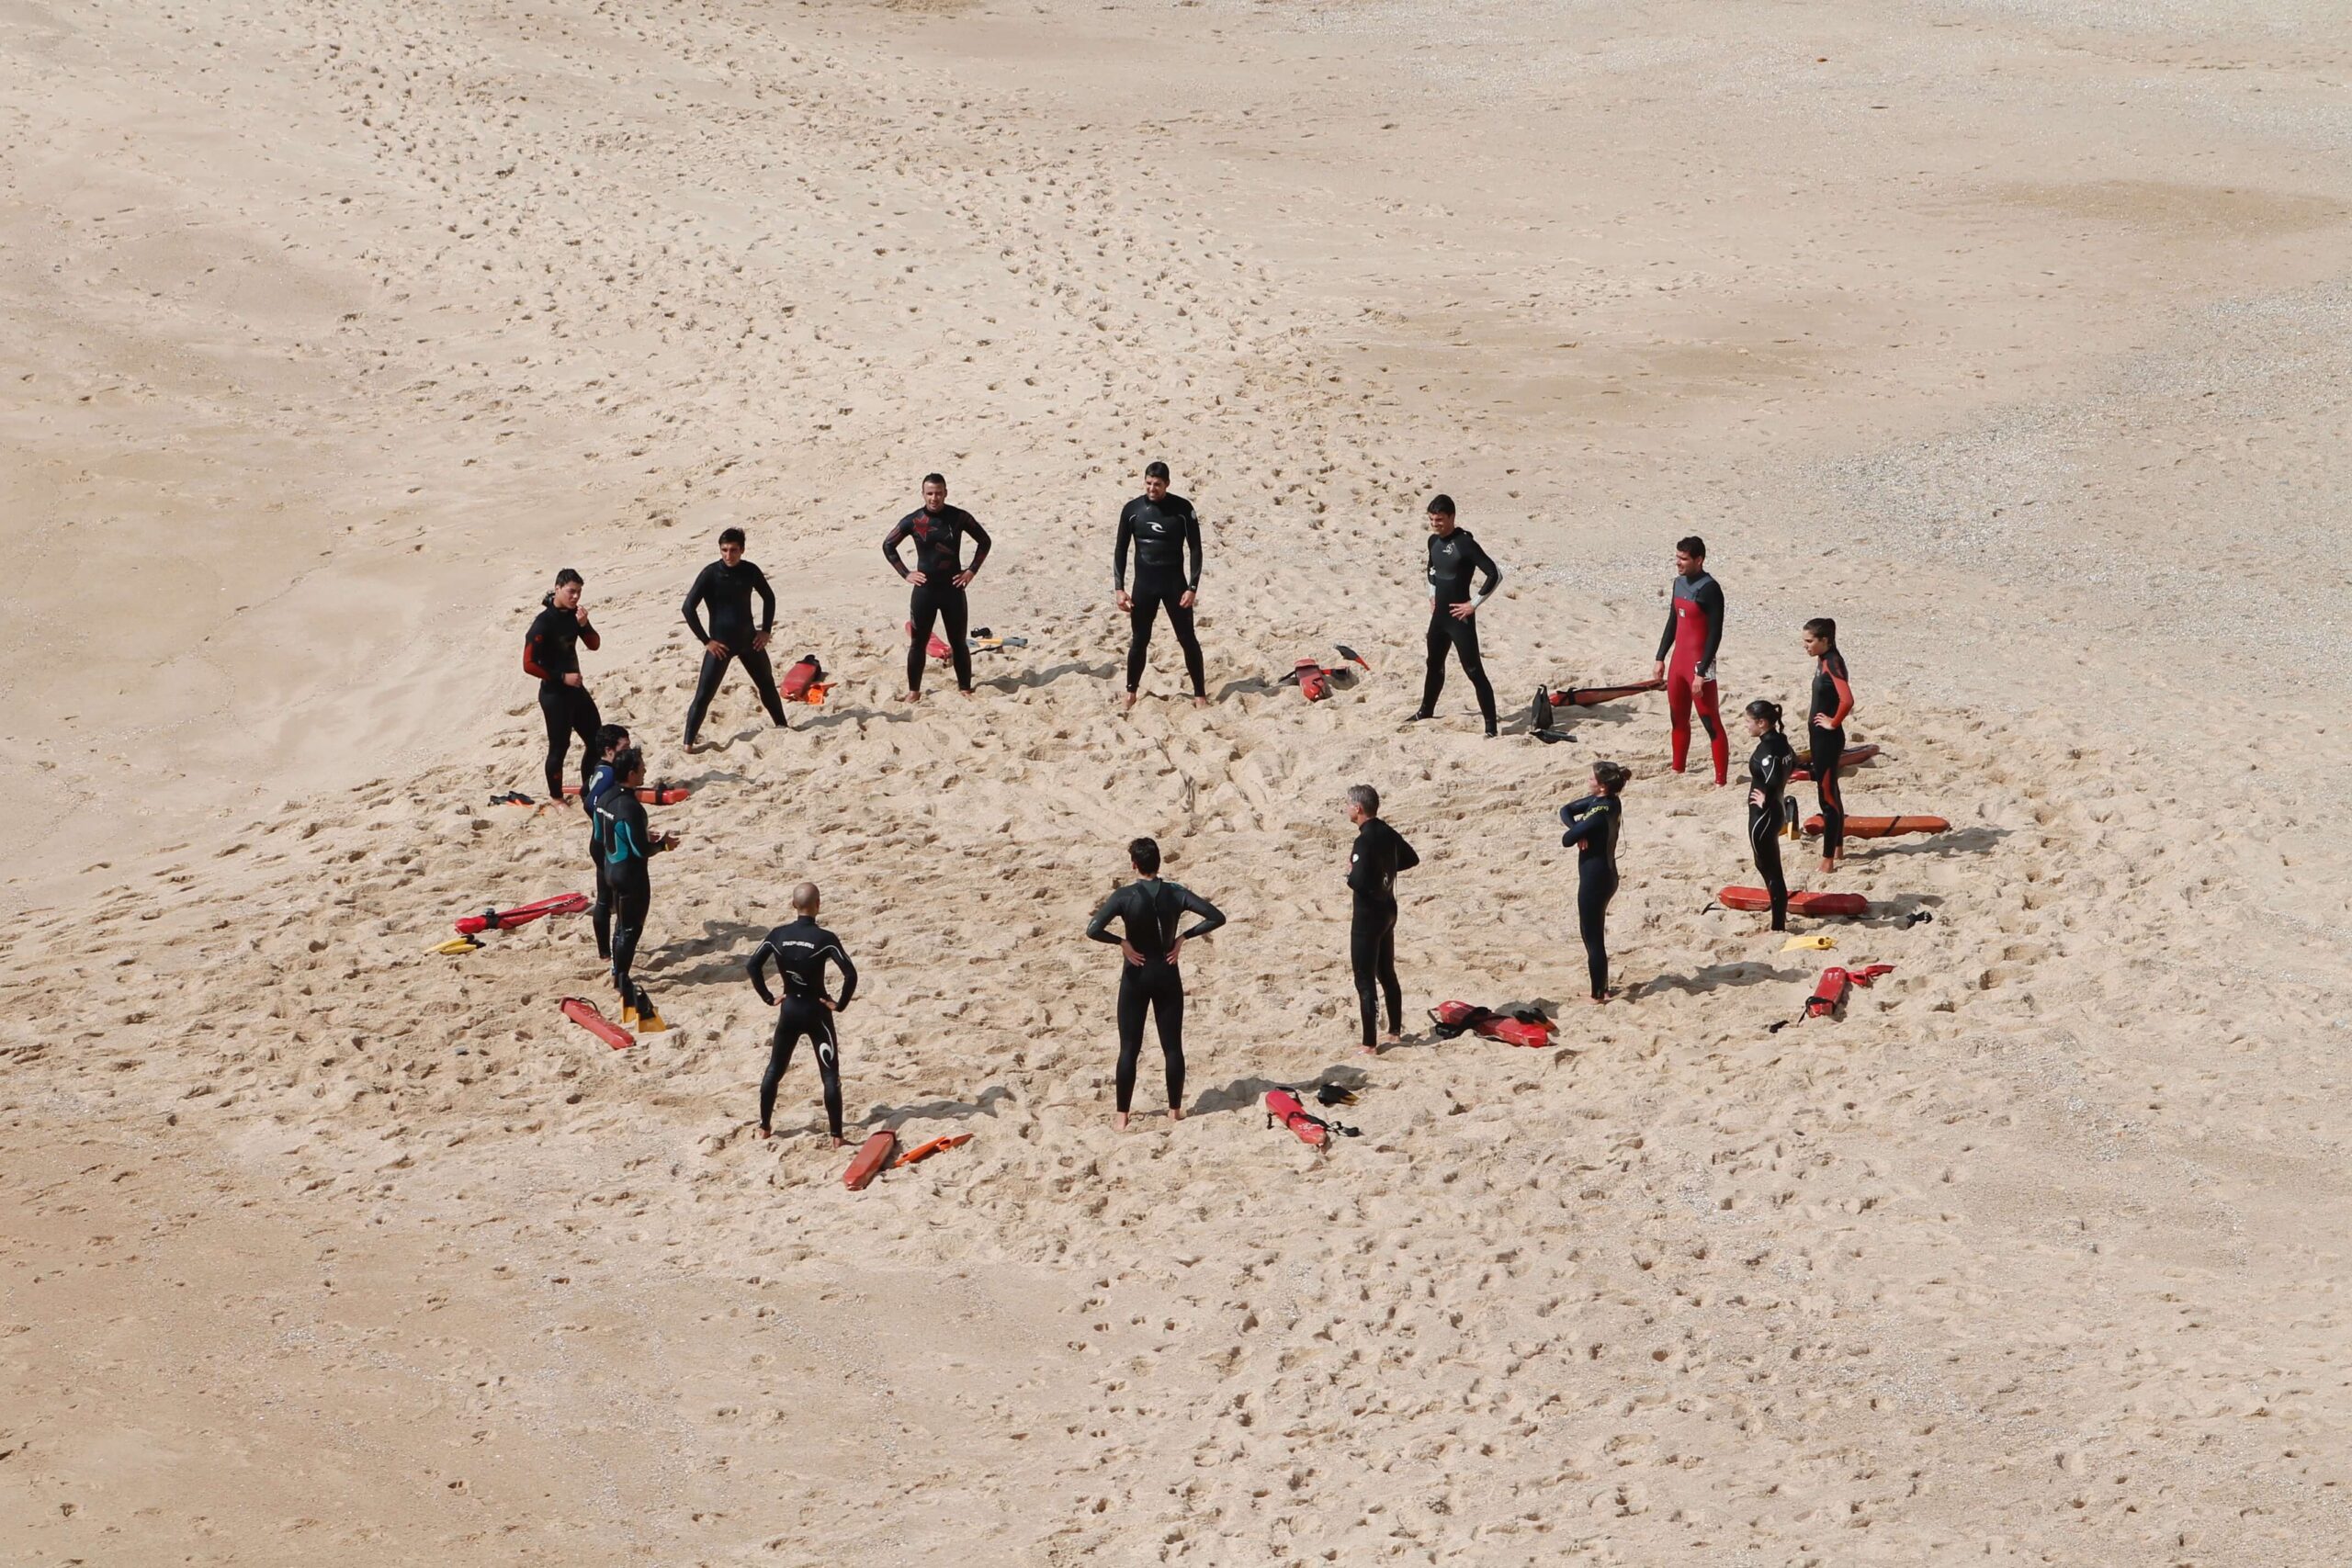 People standing in circle, team performance. Mindletic Blog